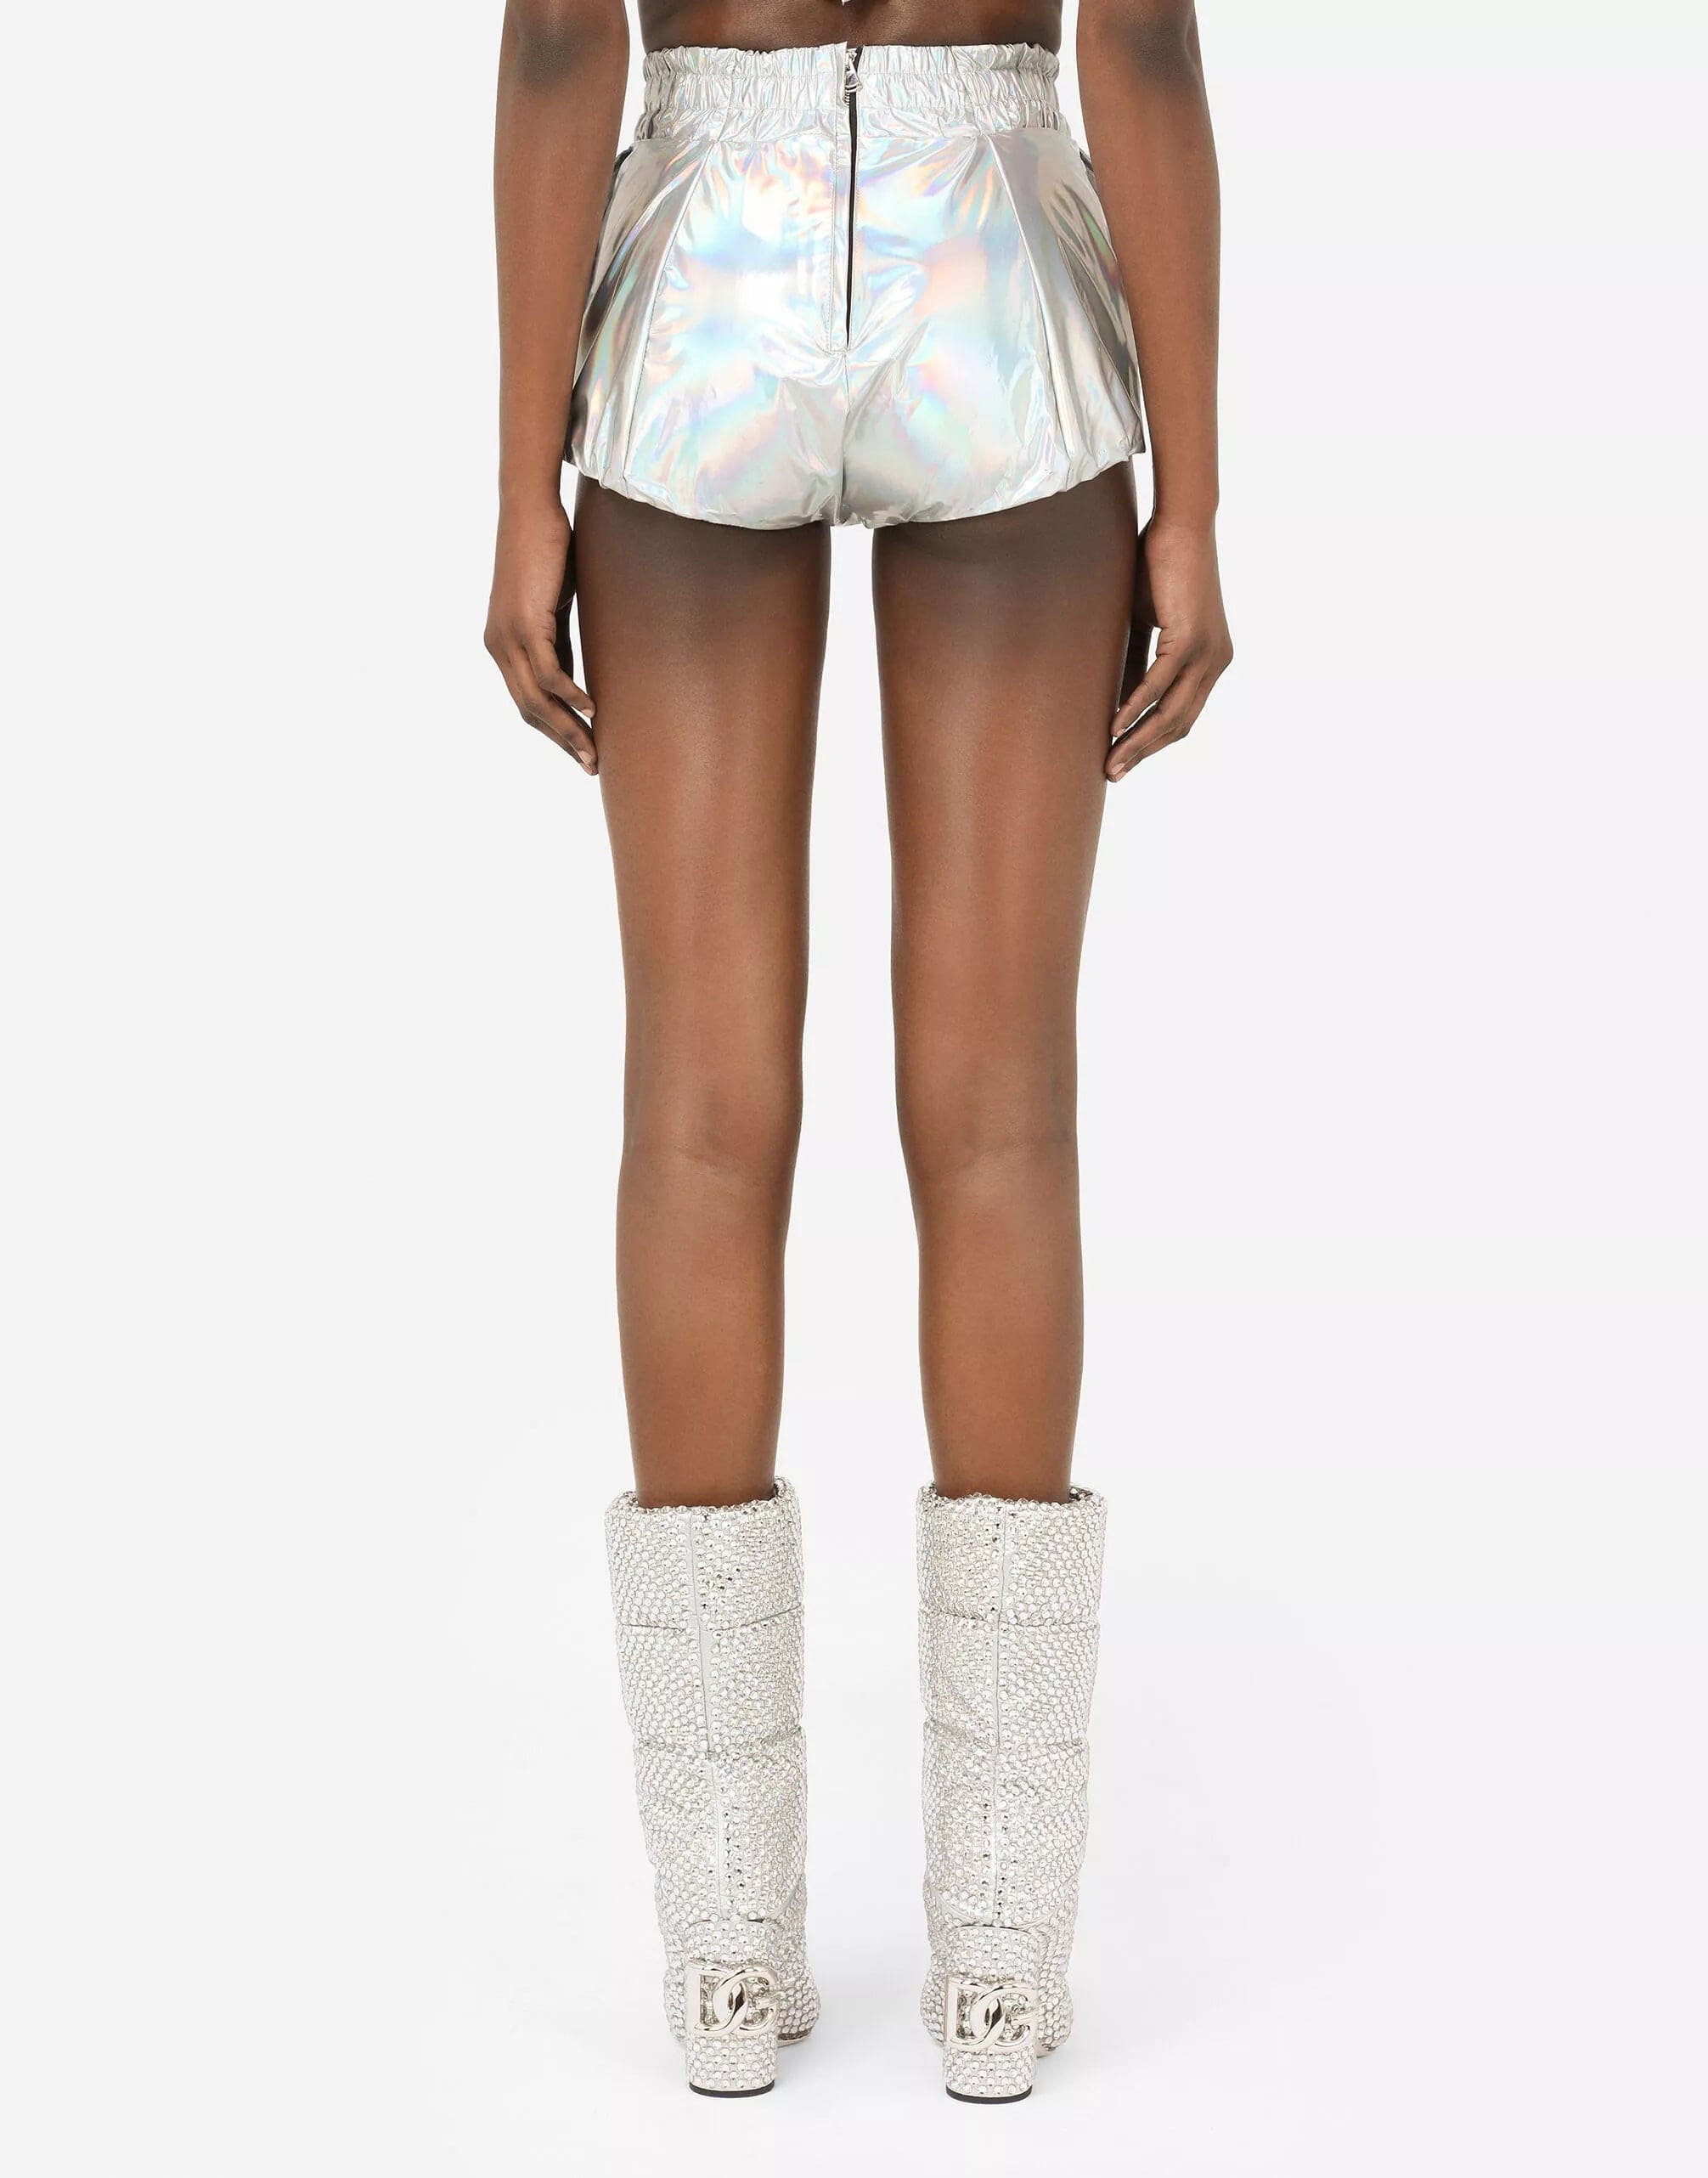 Dolce & Gabbana Silver Holographic High Waist Hot Pants Shorts